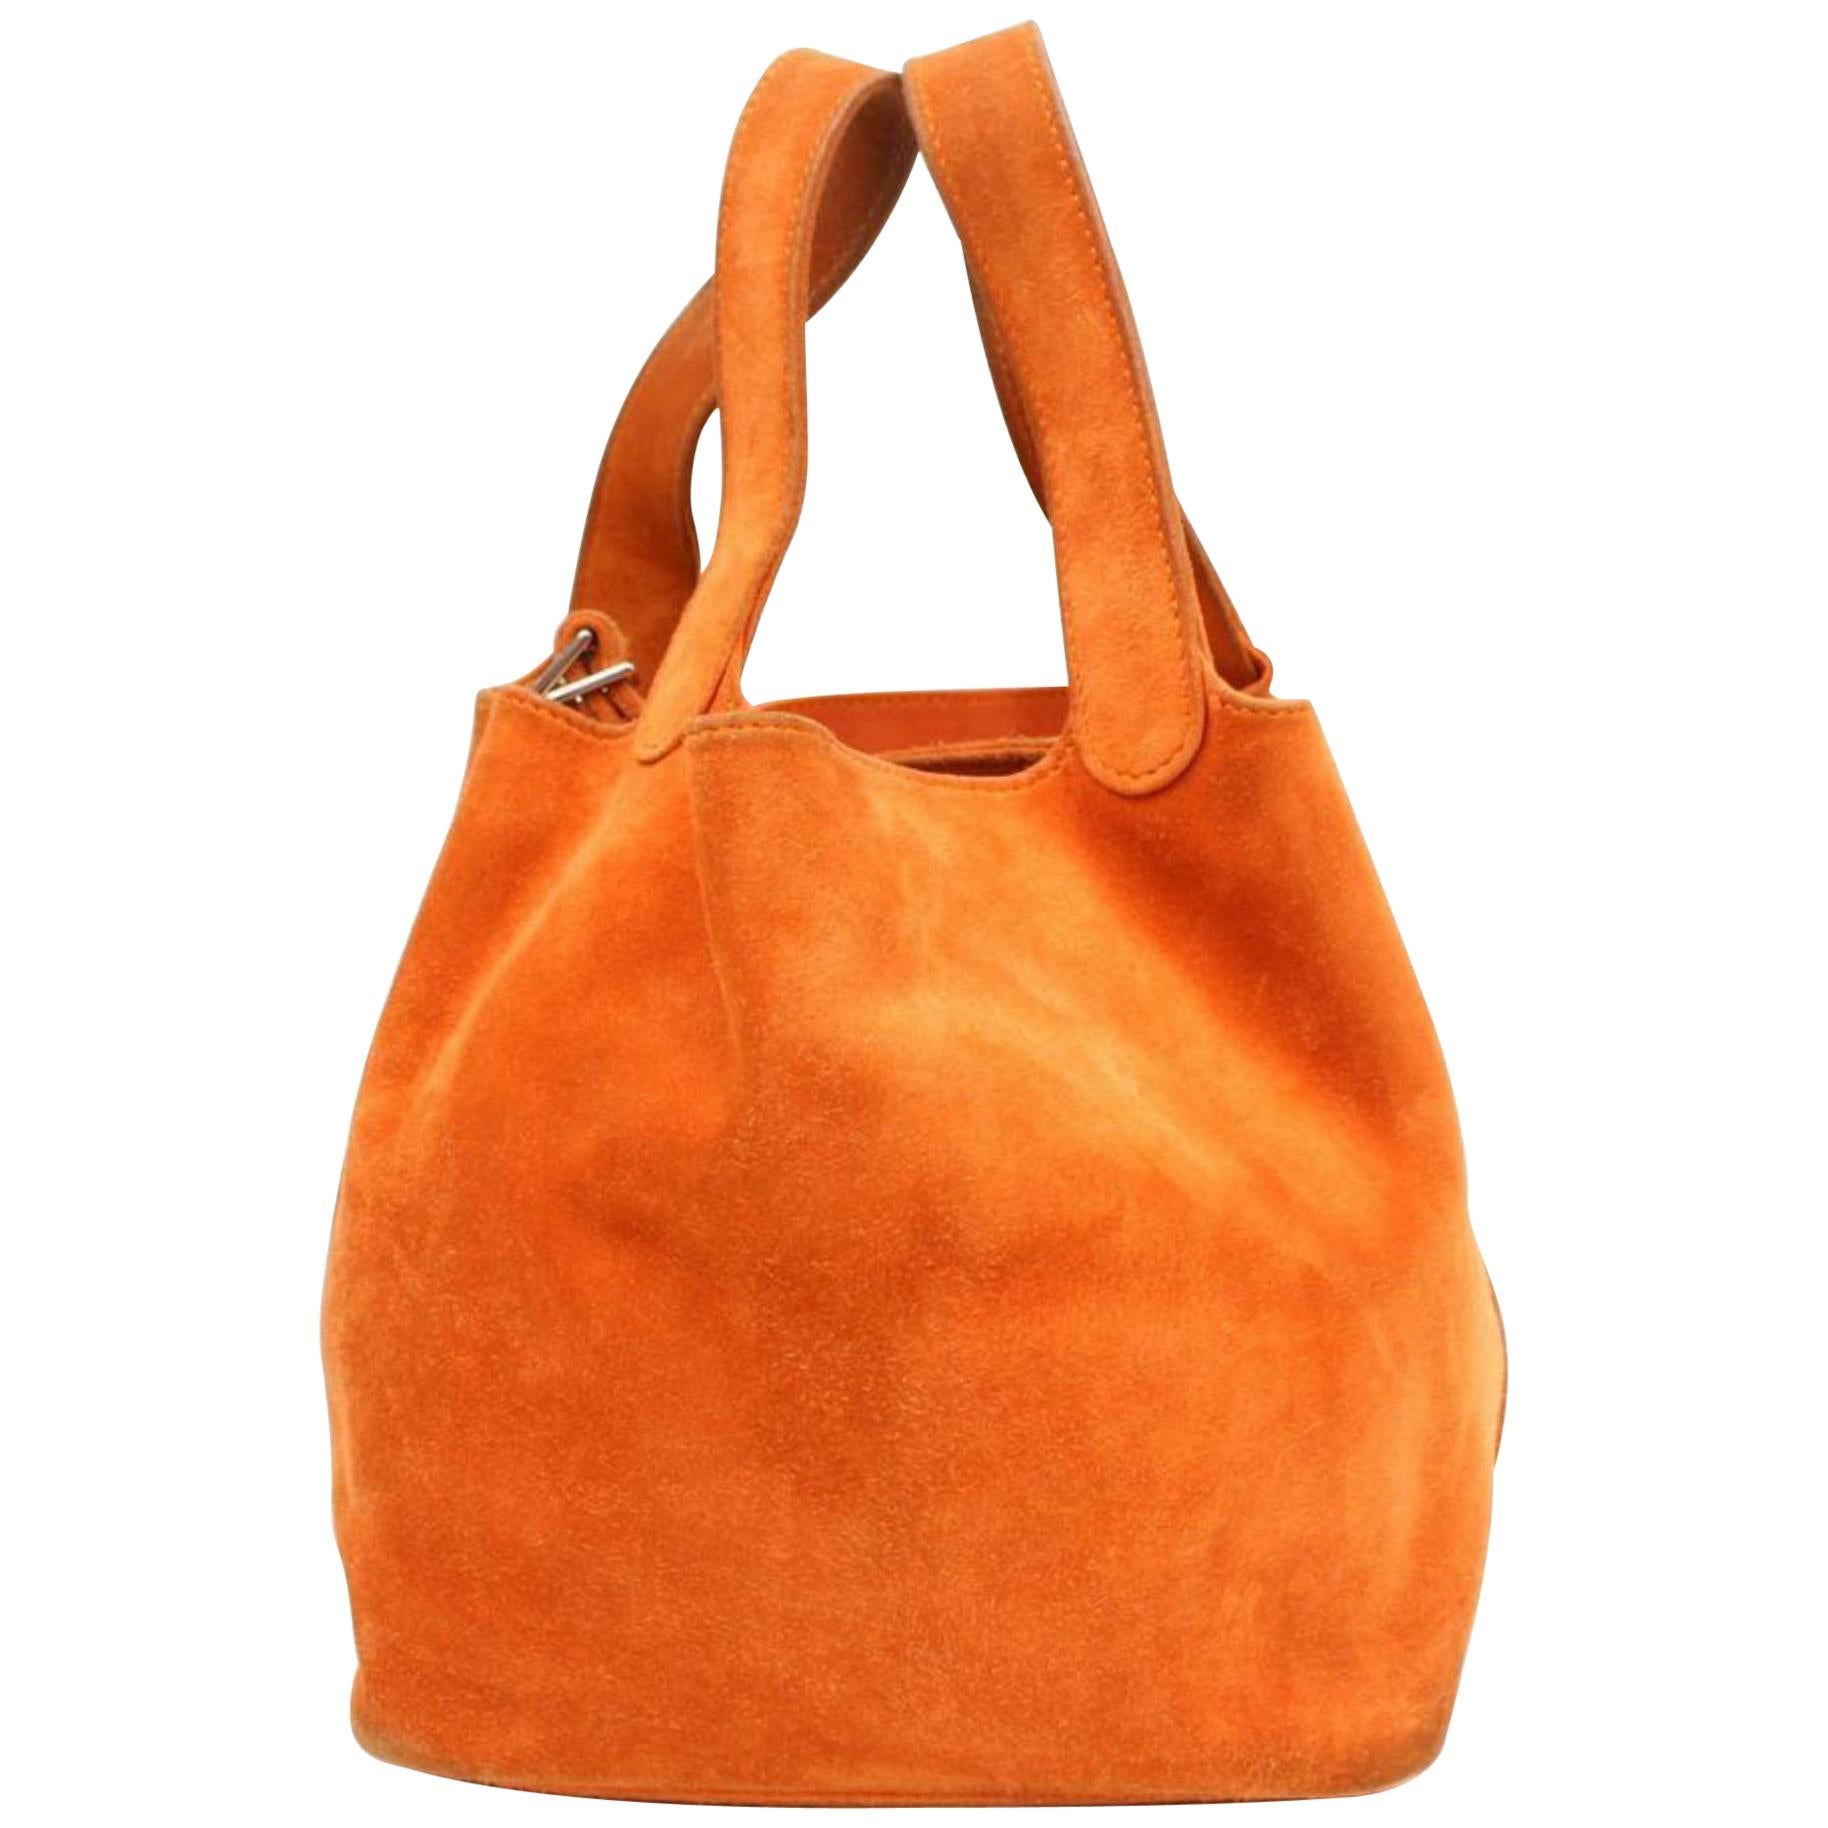 Hermès Picotin 18 Pm 868694 Orange Suede Leather Tote For Sale